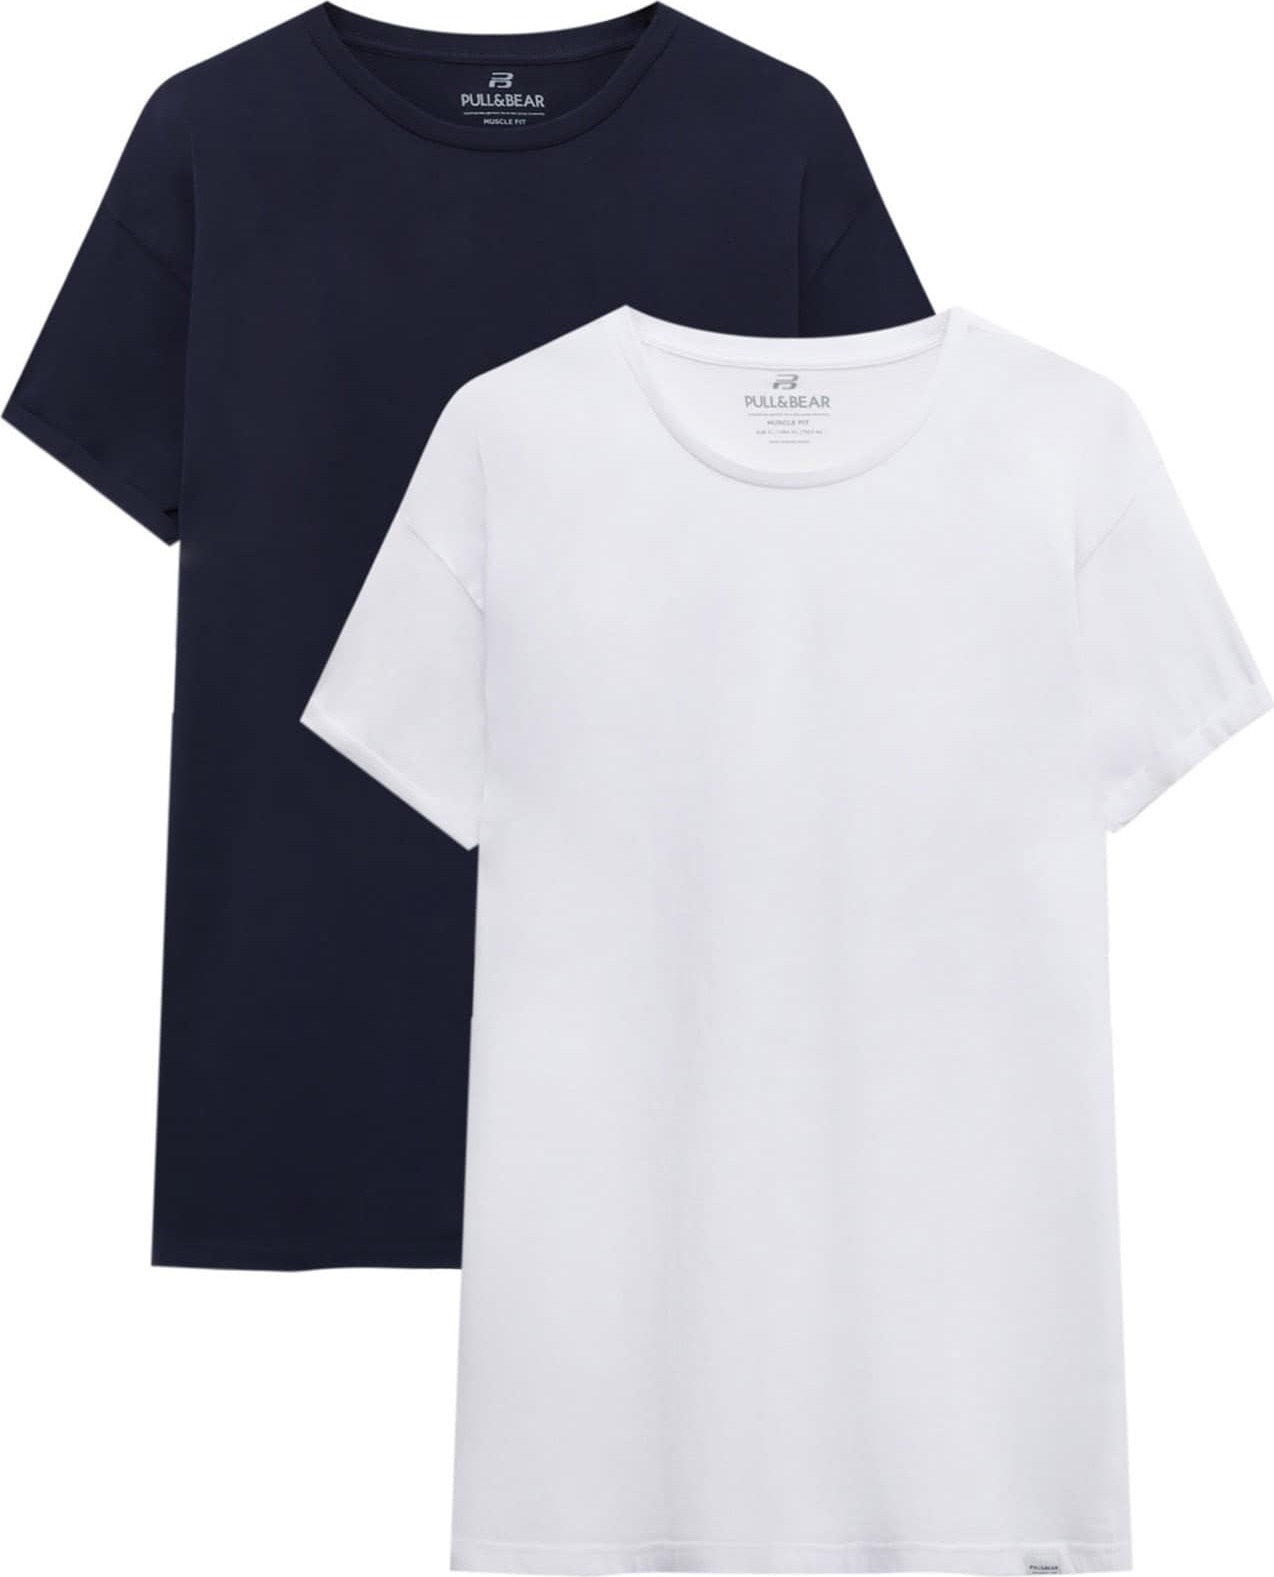 Tričko Pull&Bear námořnická modř / bílá